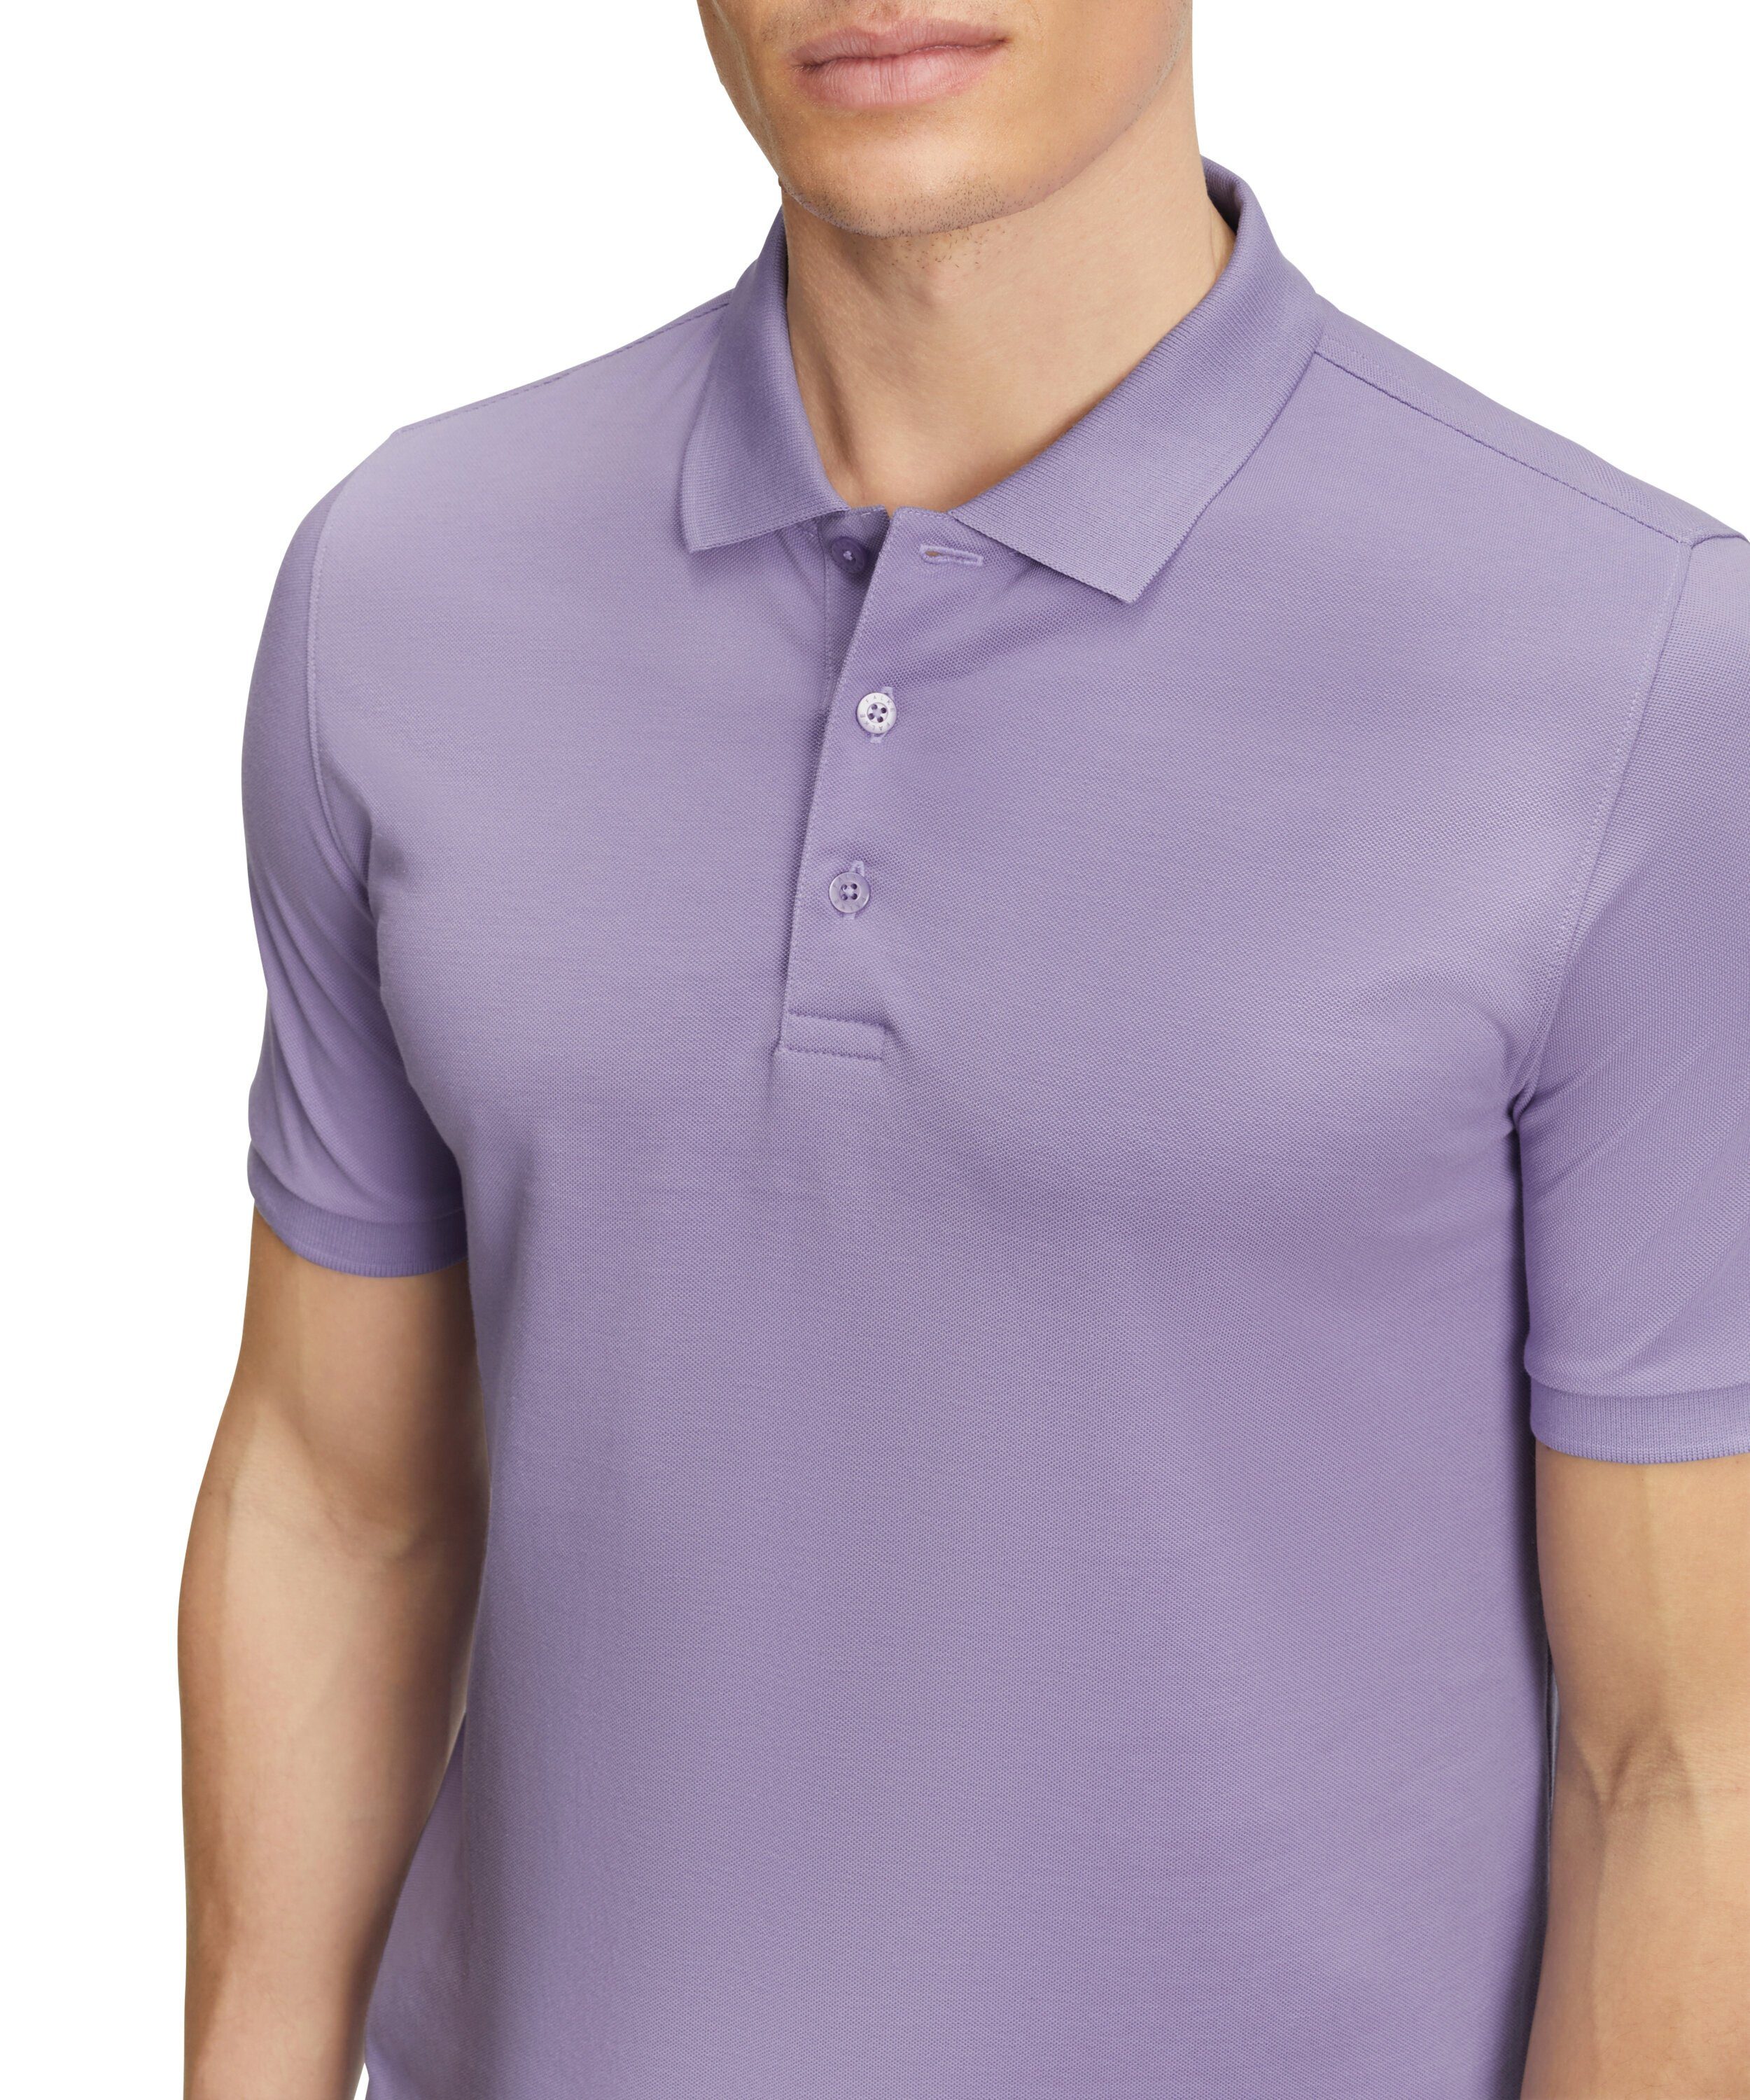 aus lavender Pima-Baumwolle FALKE Poloshirt hochwertiger (6901)